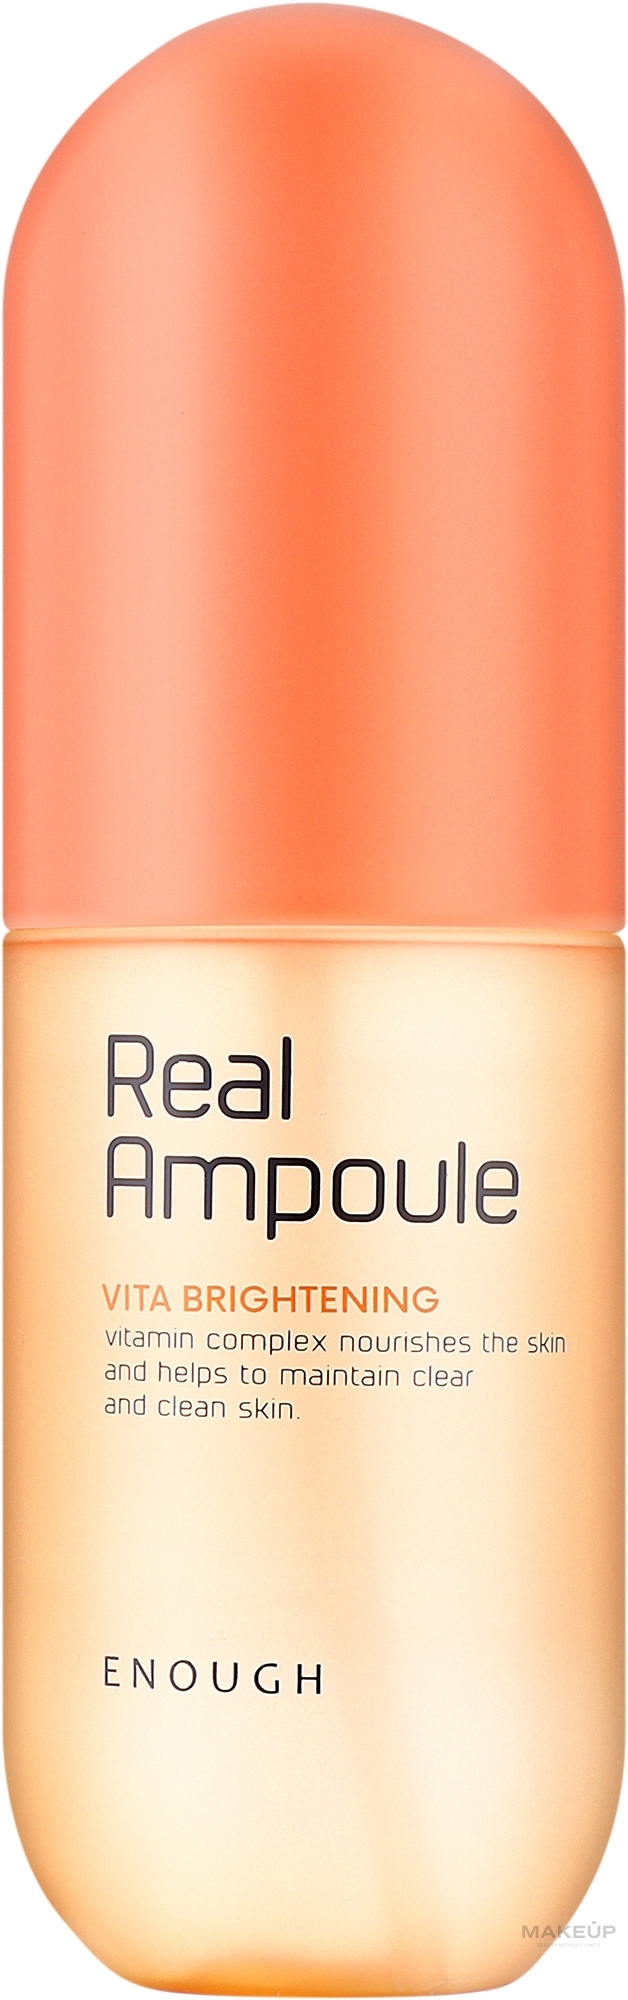 Сыворотка-спрей для лица - Enough Real Ampoule Vita Brightening — фото 200ml